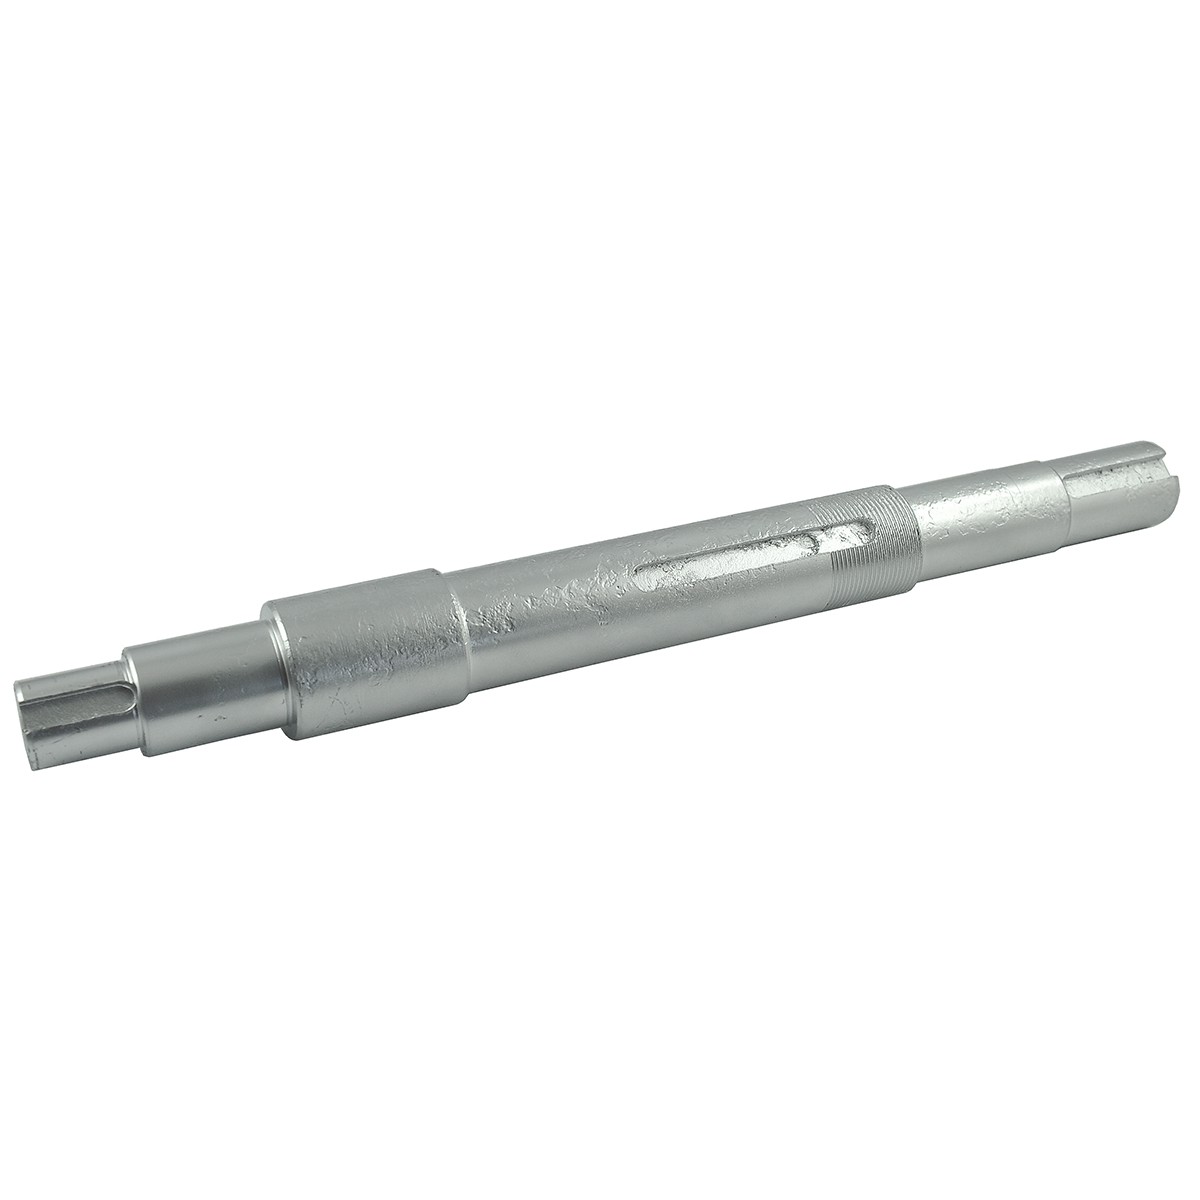 Drive shaft for chipper / 363 mm / 4FARMER DR-CS-15HP-H